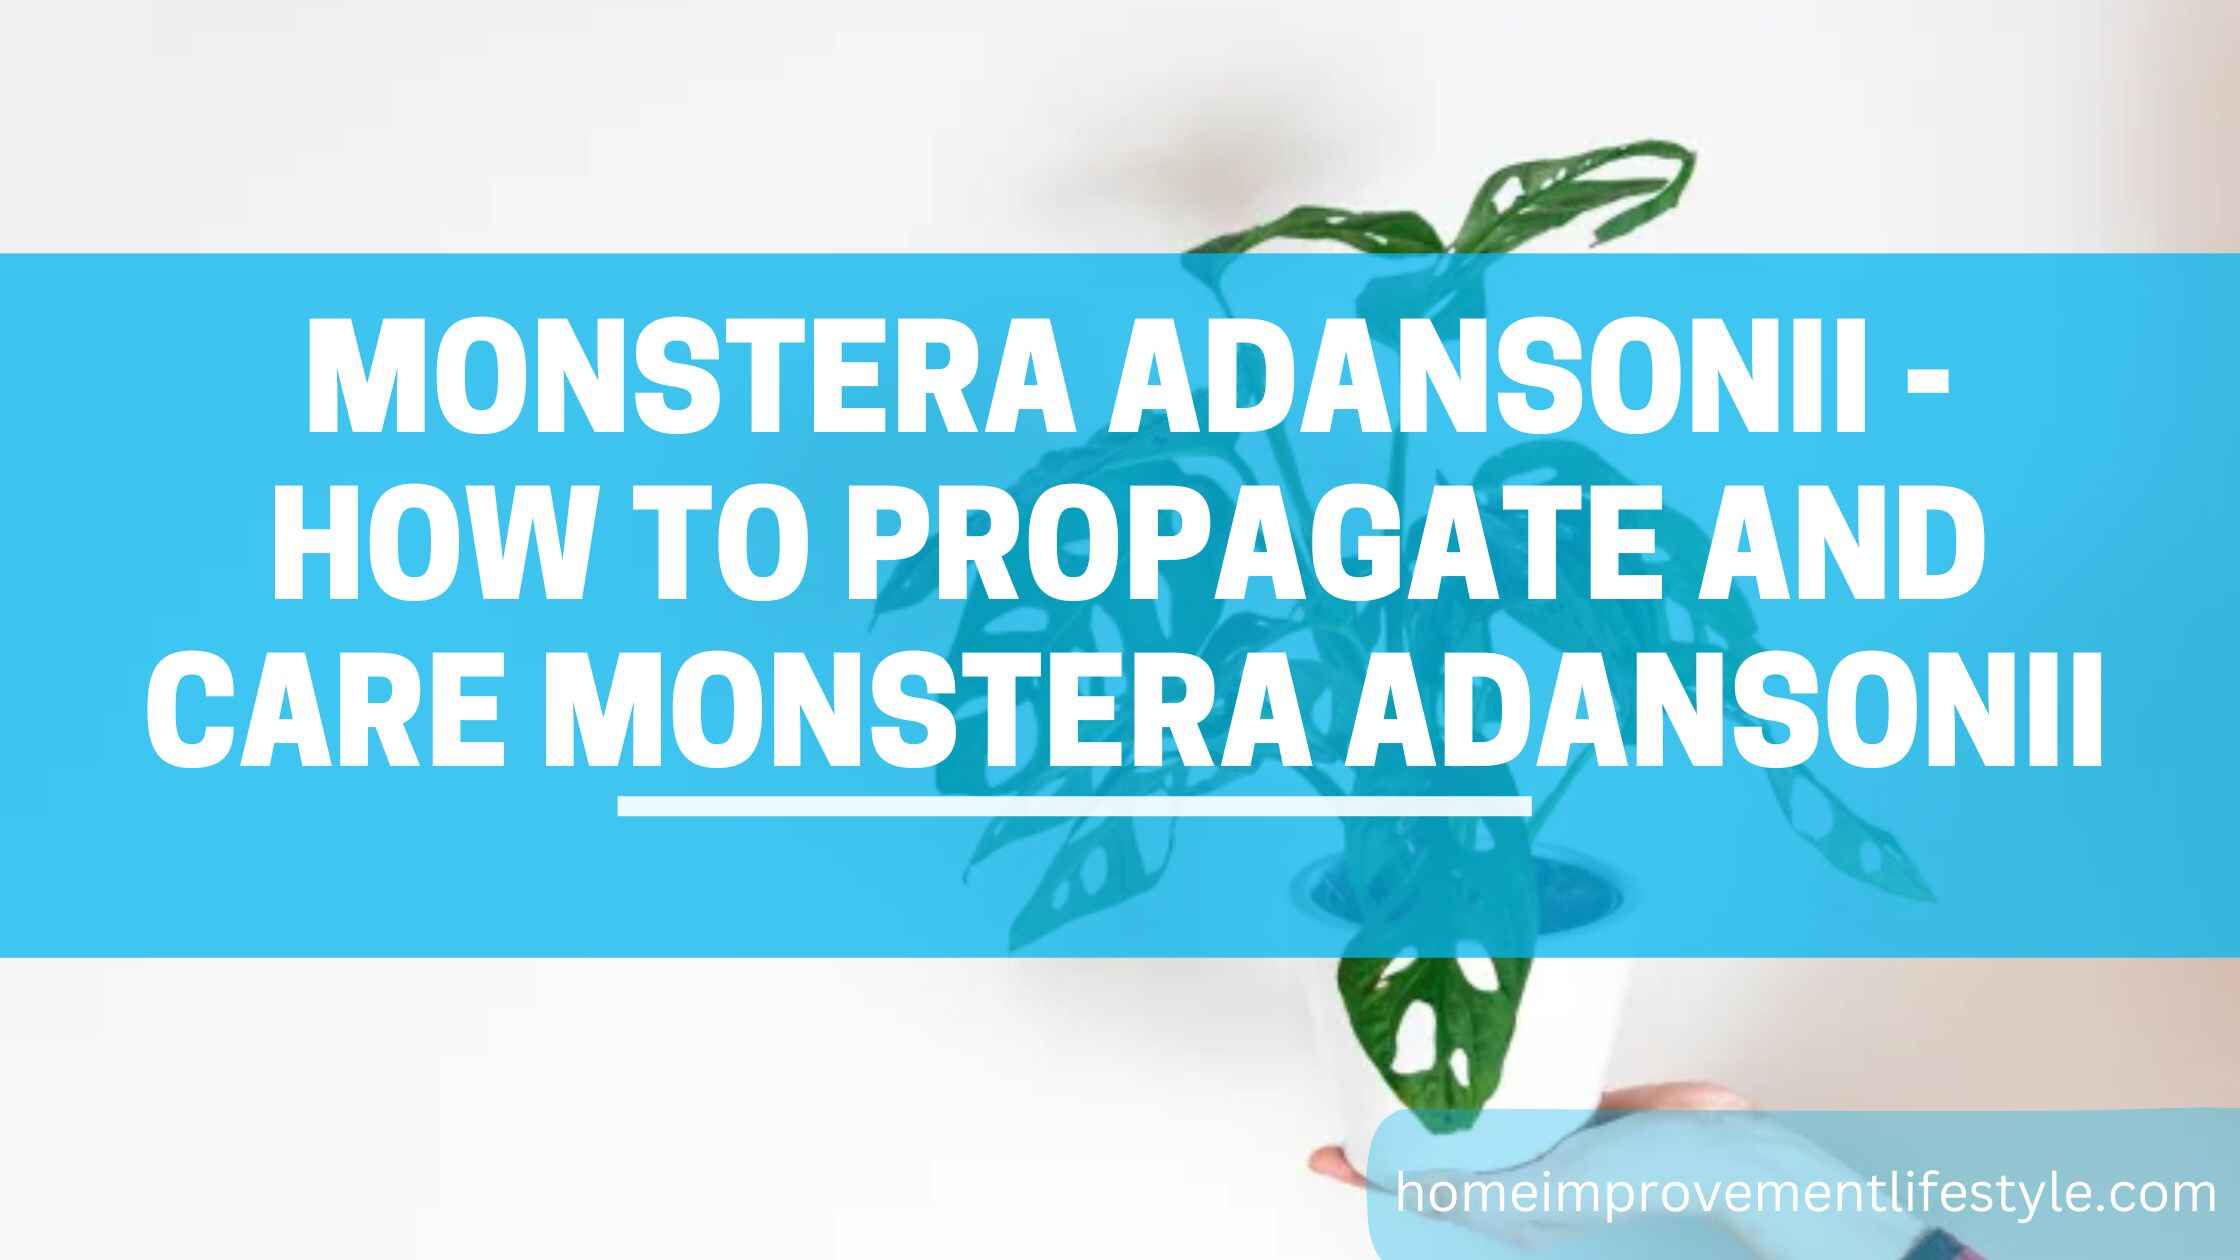 Monstera adansonii - How to Propagate and Care Monstera adansonii